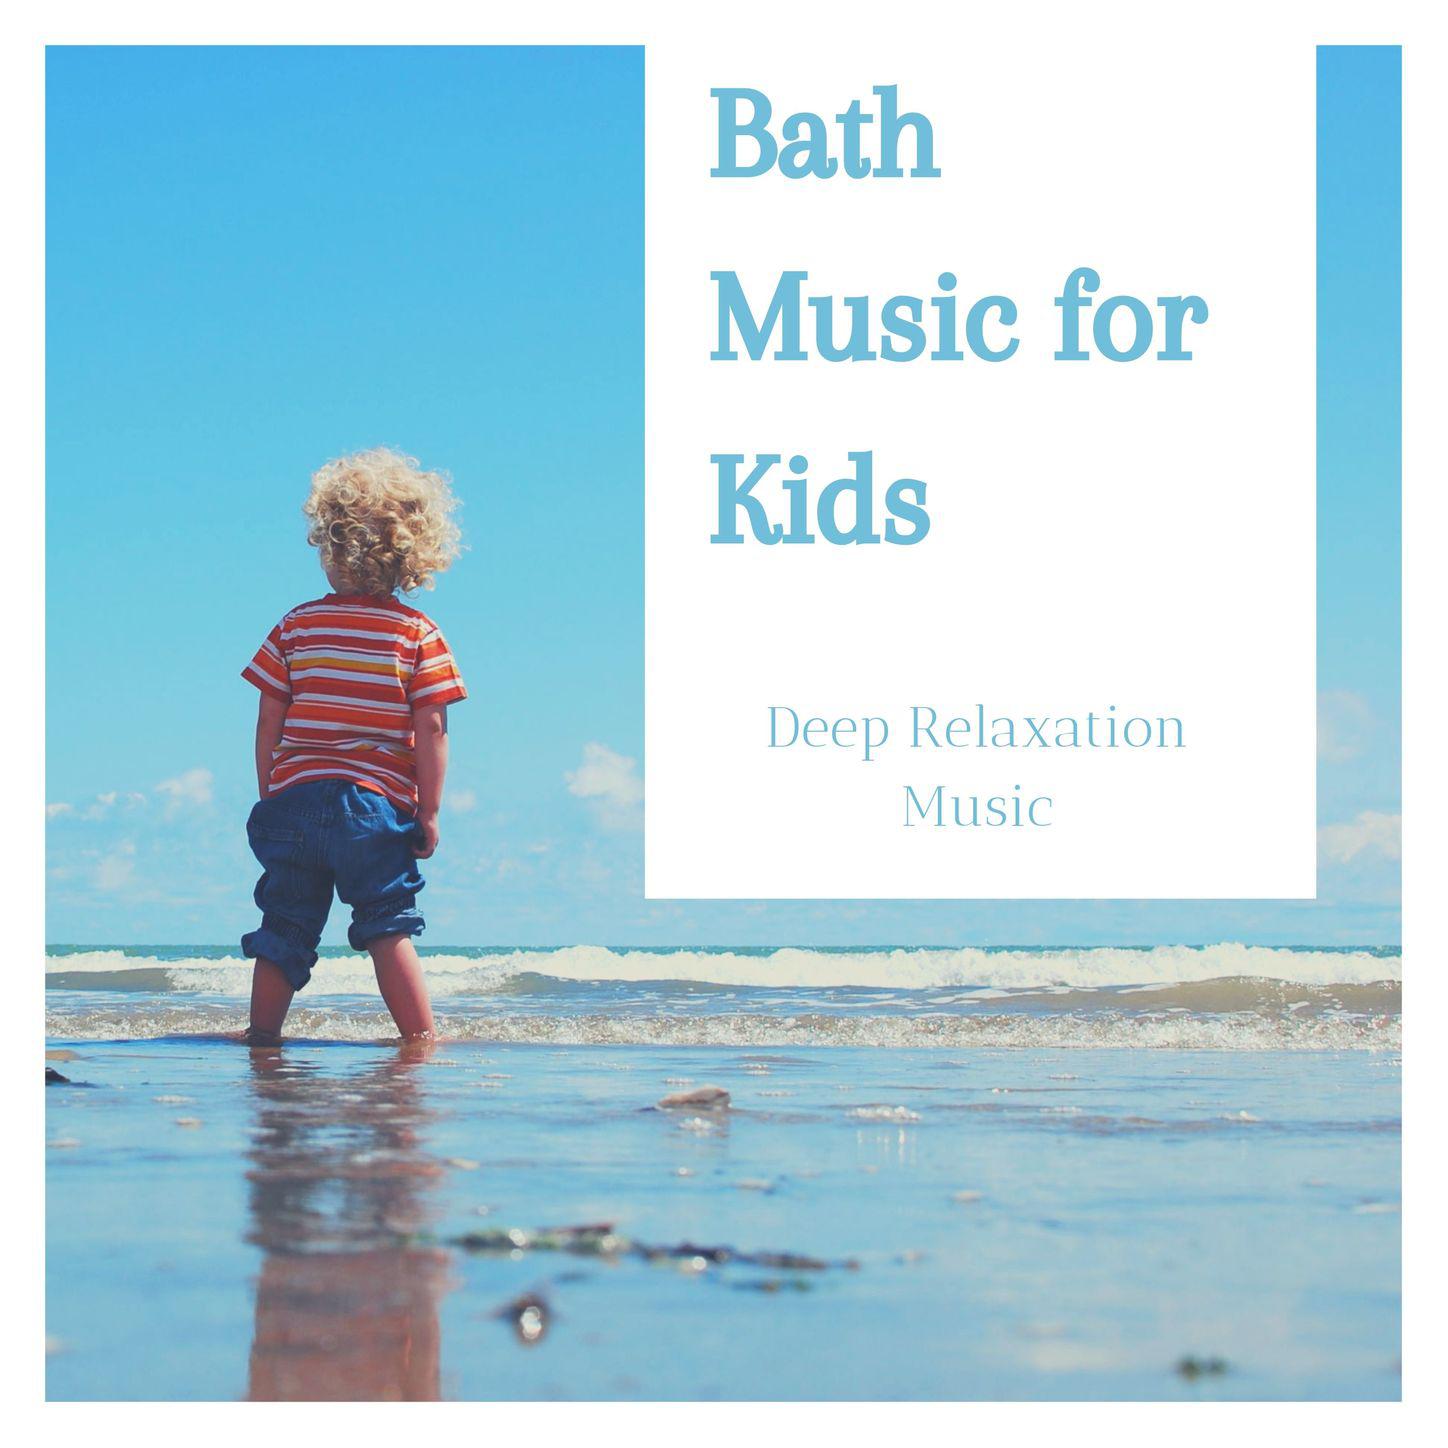 Bath Music for Kids: Deep Relaxation Music